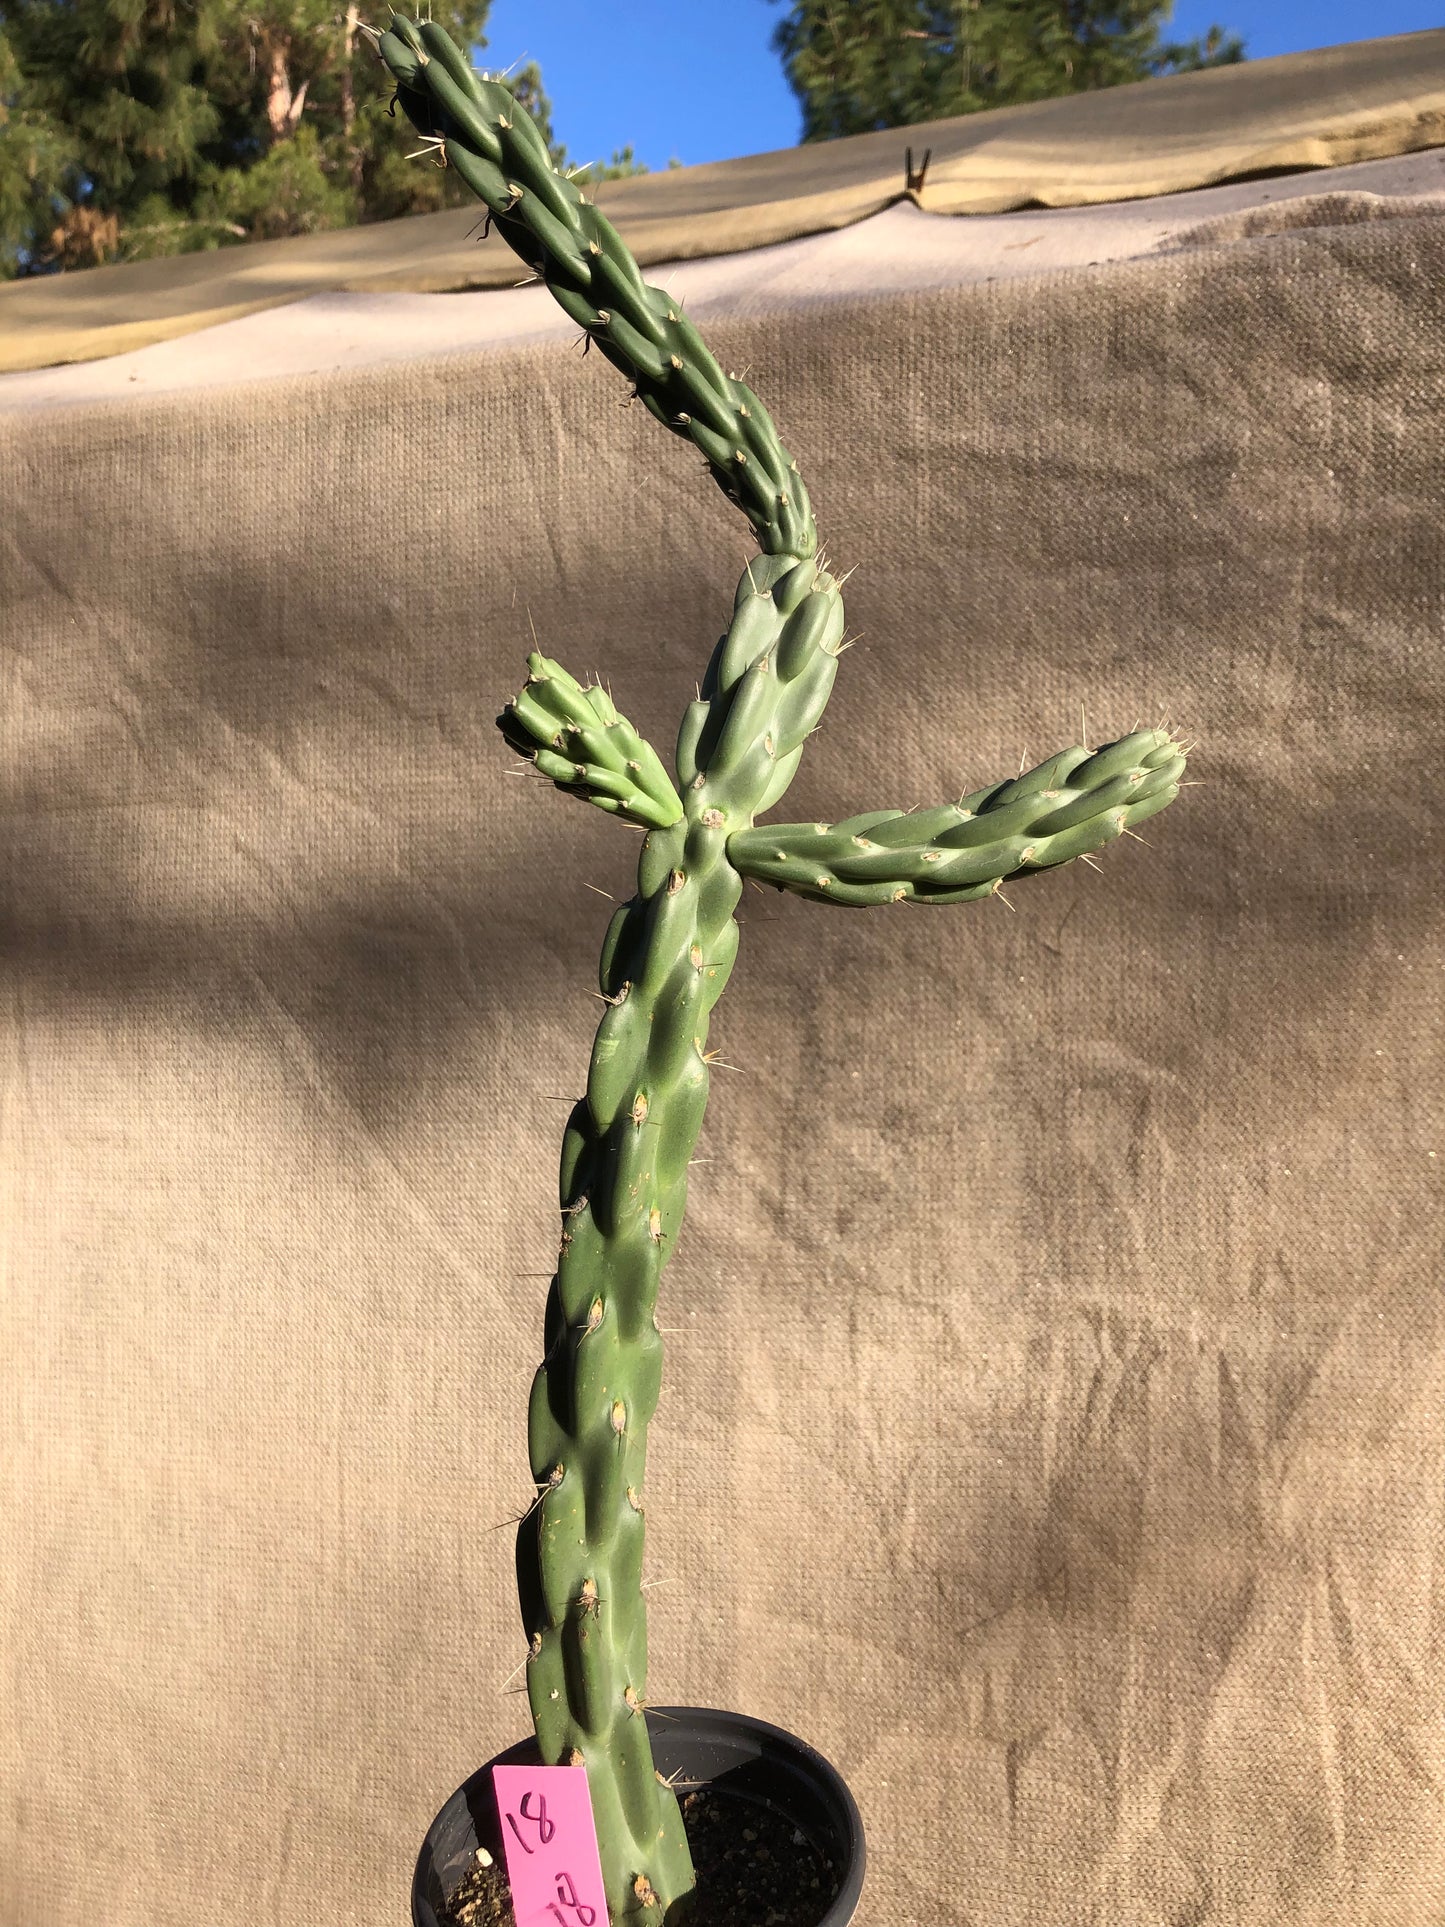 Cholla Cylindropuntia Buckhorn Cactus 18”Tall #18P